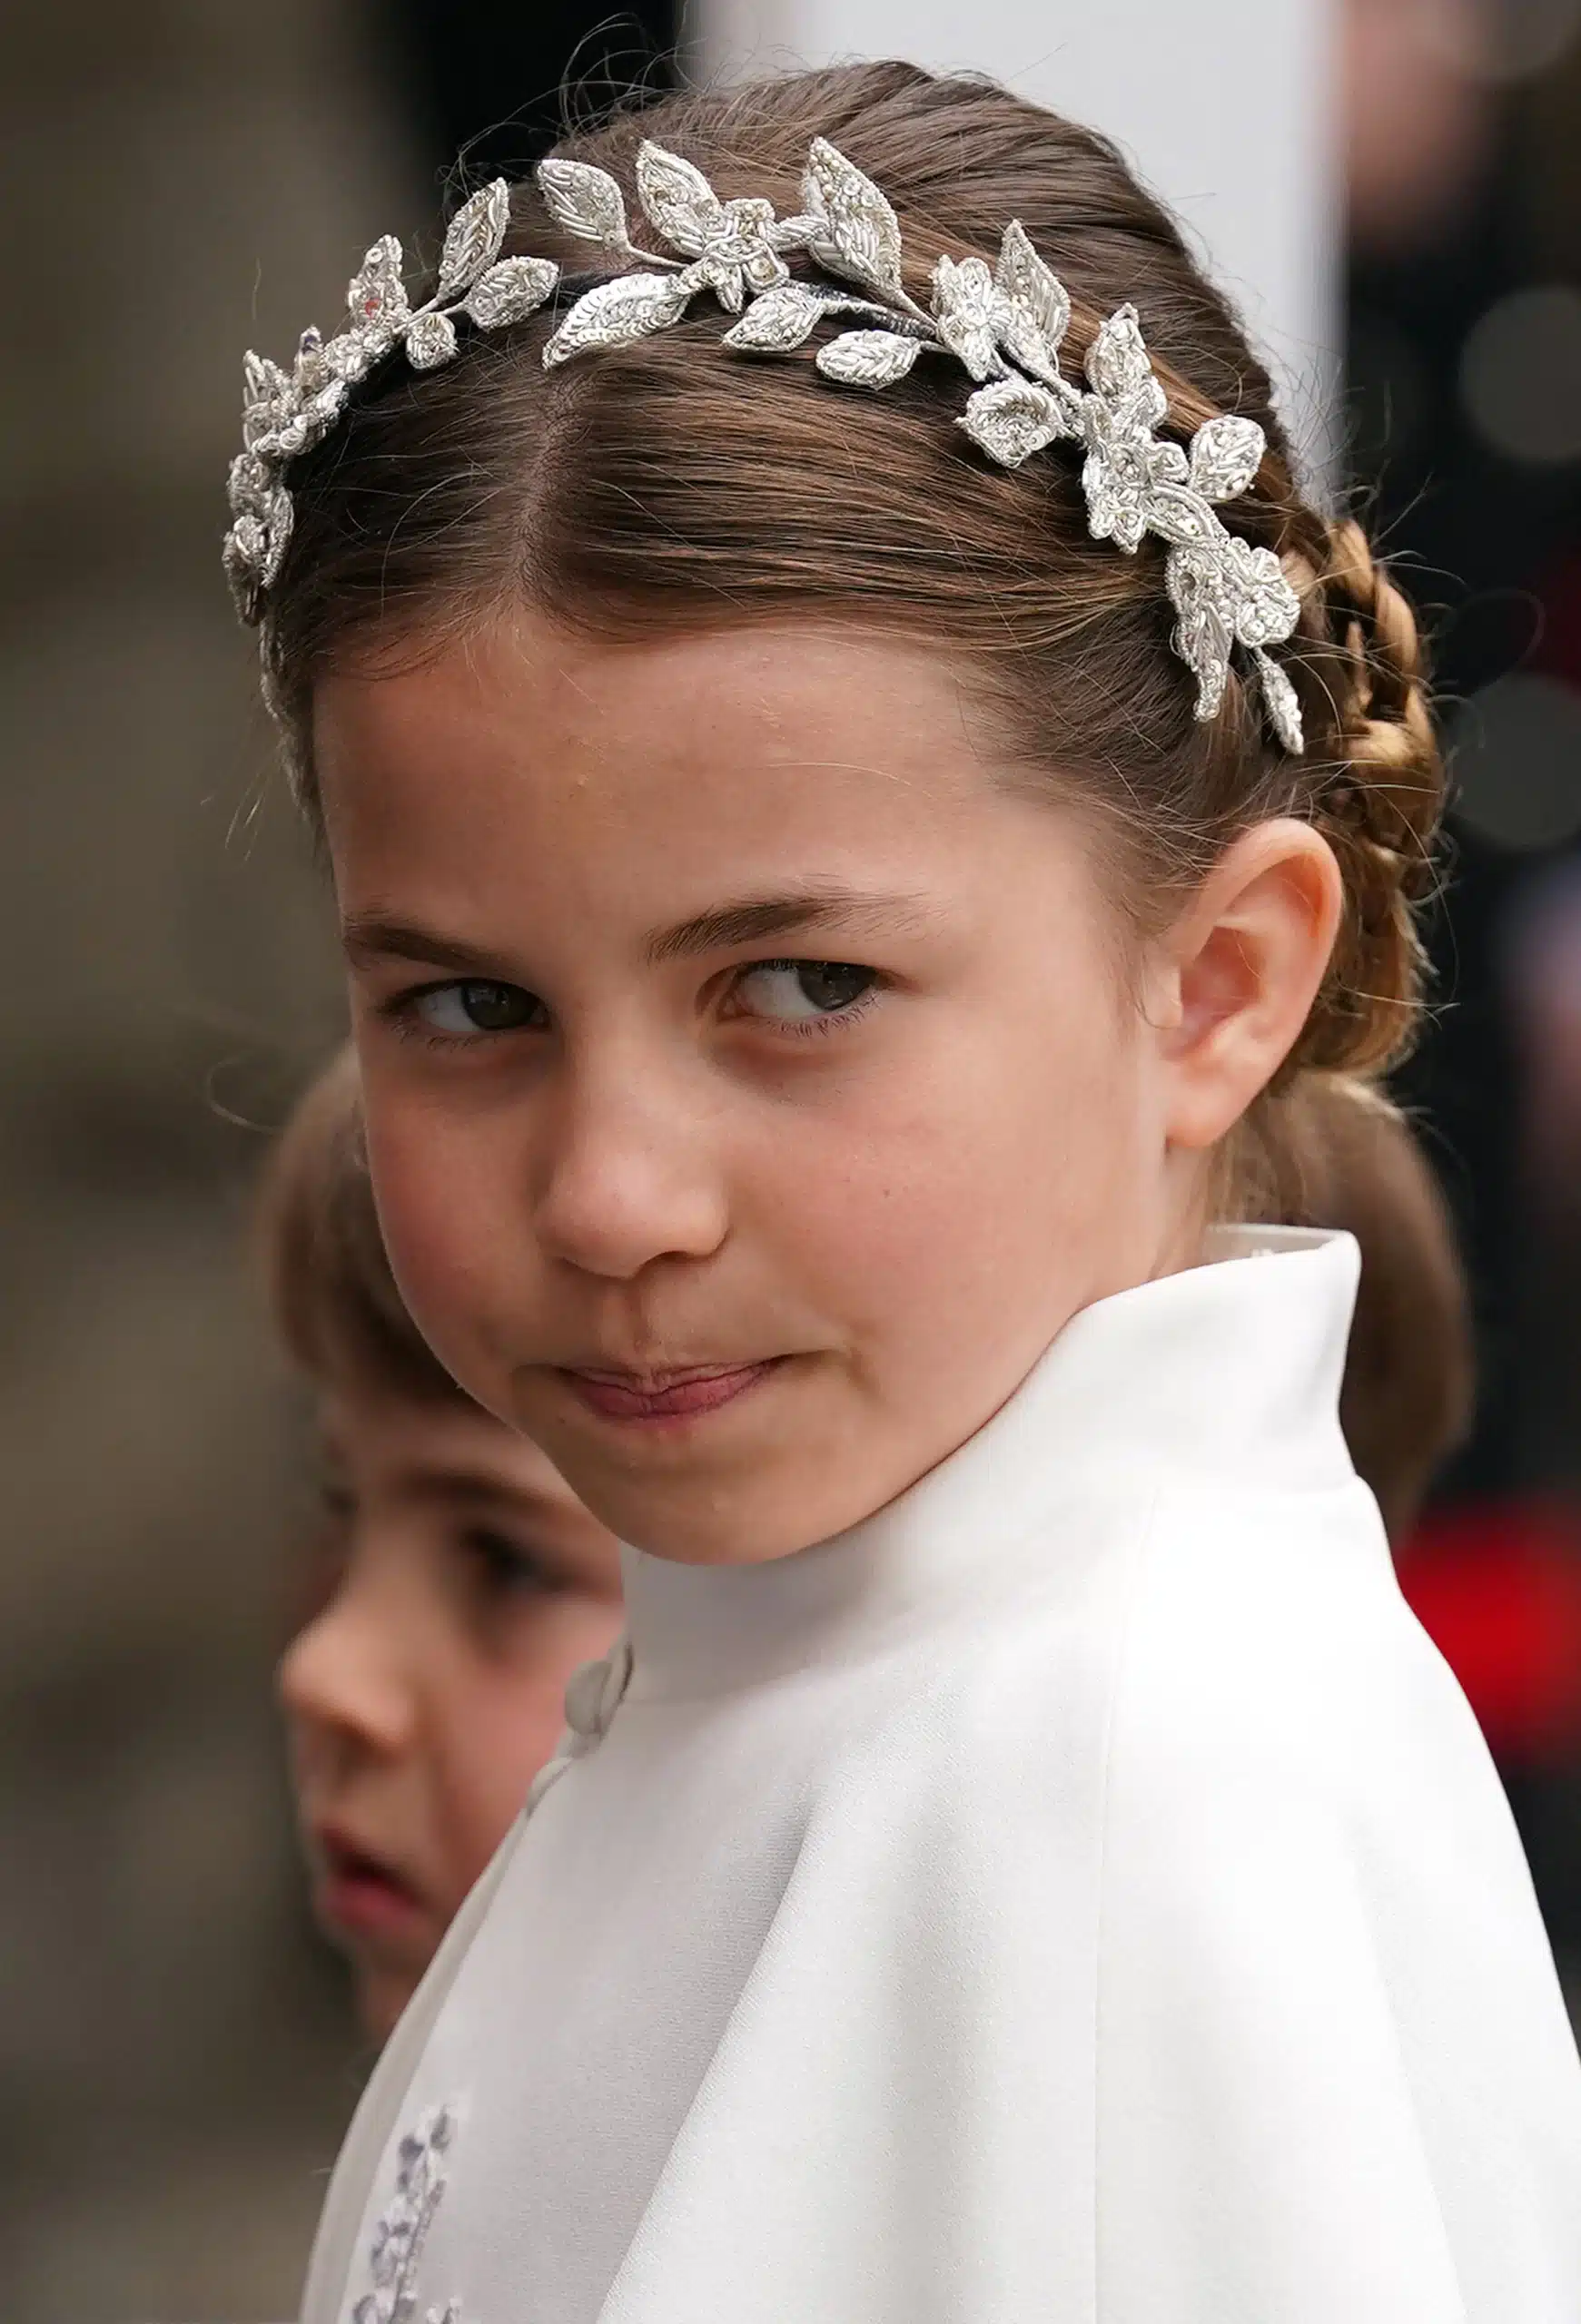 Princesa Charlotte na coroação do rei Charles